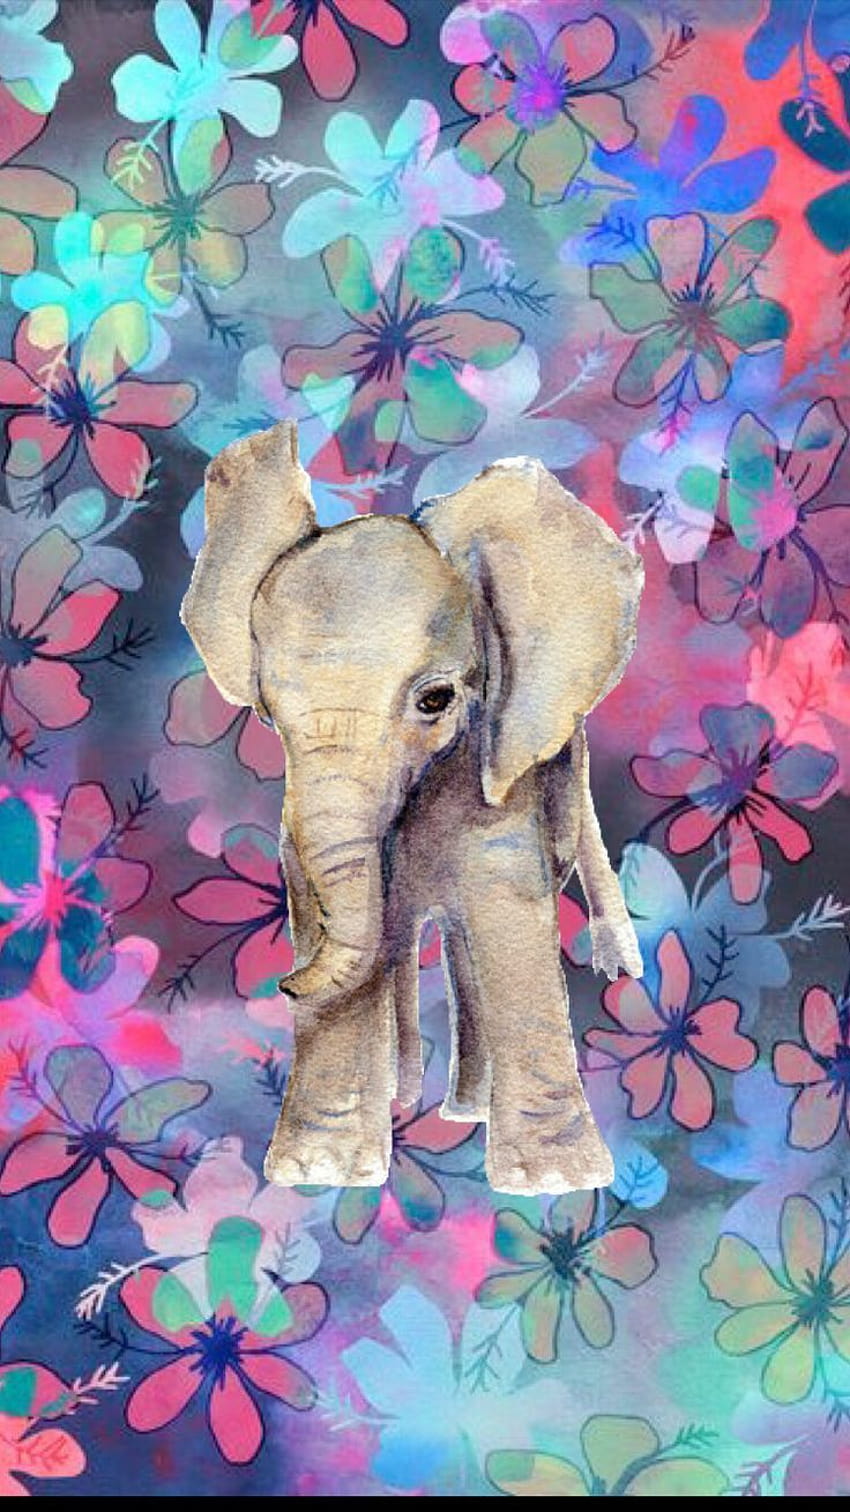 Obey Elephant on Dog HD phone wallpaper